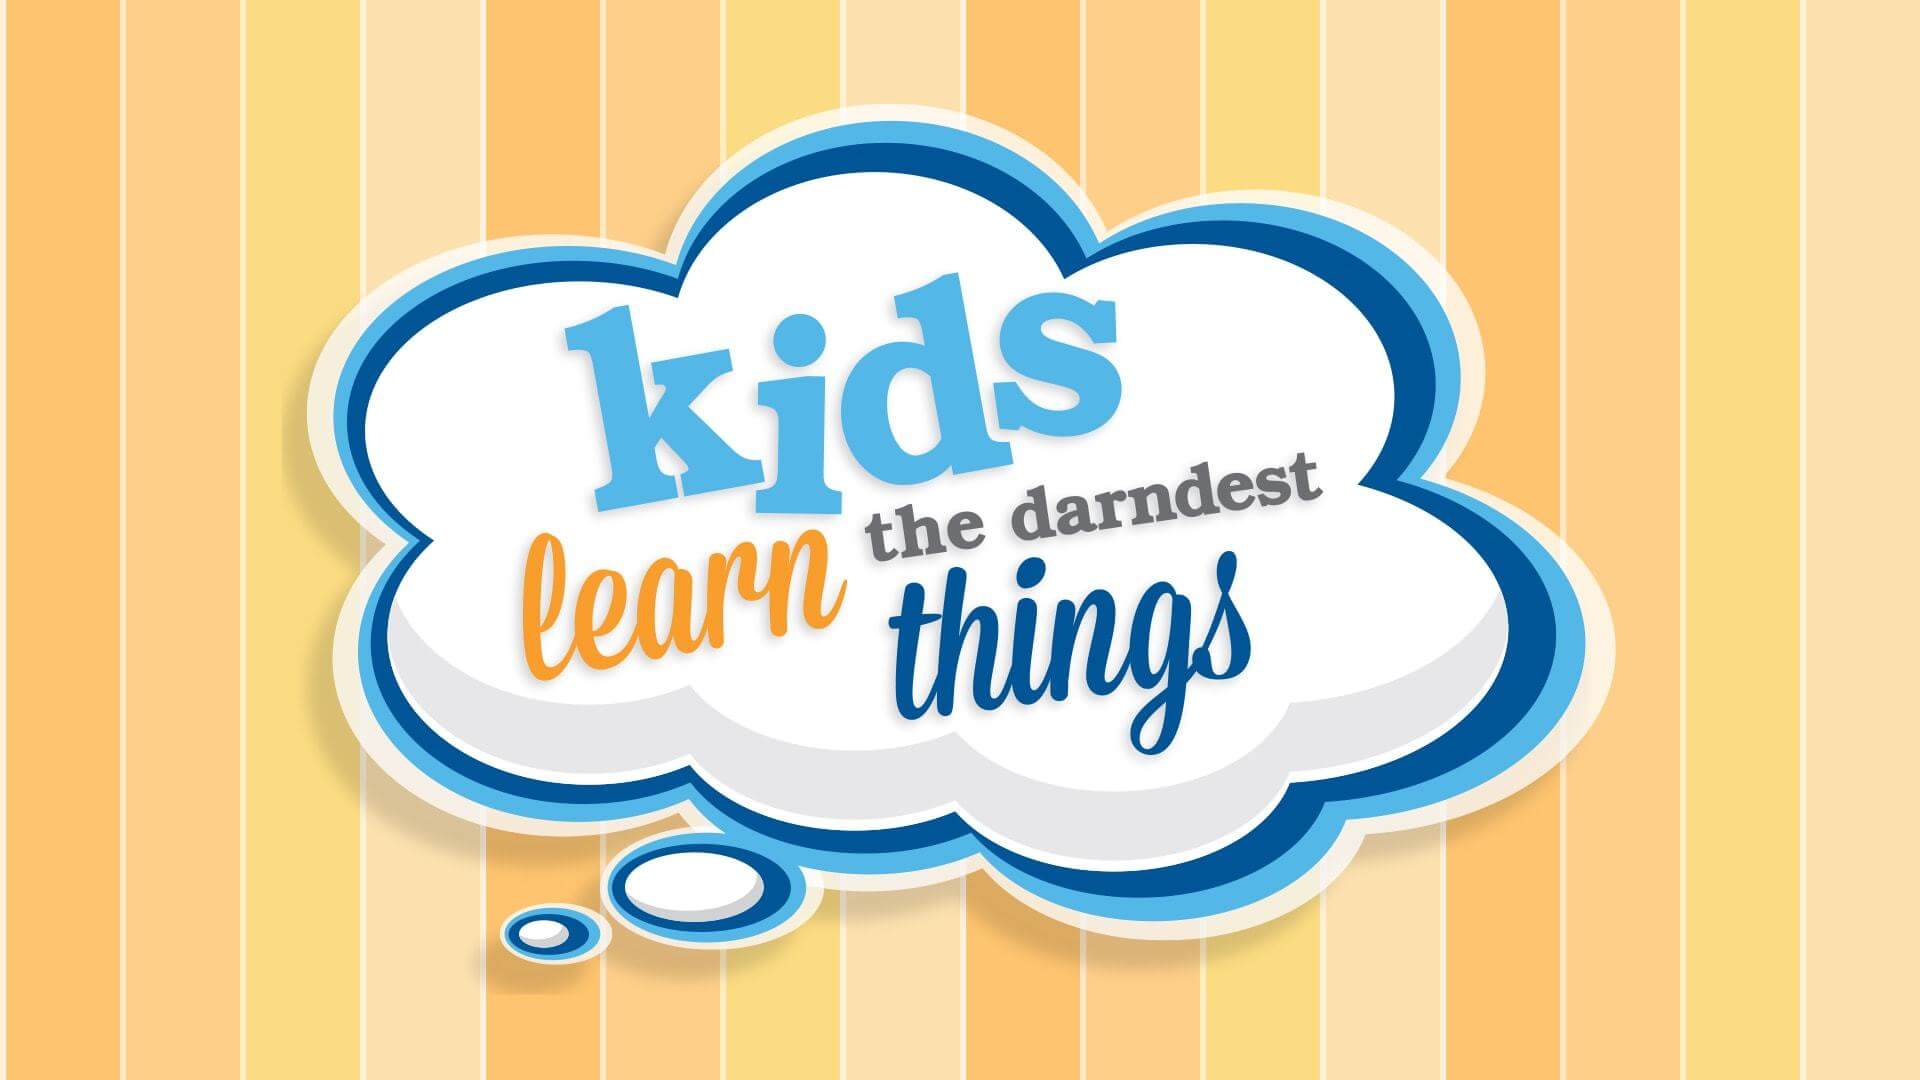 kids-learn-the-darndest-things-1920x1080-6.jpg